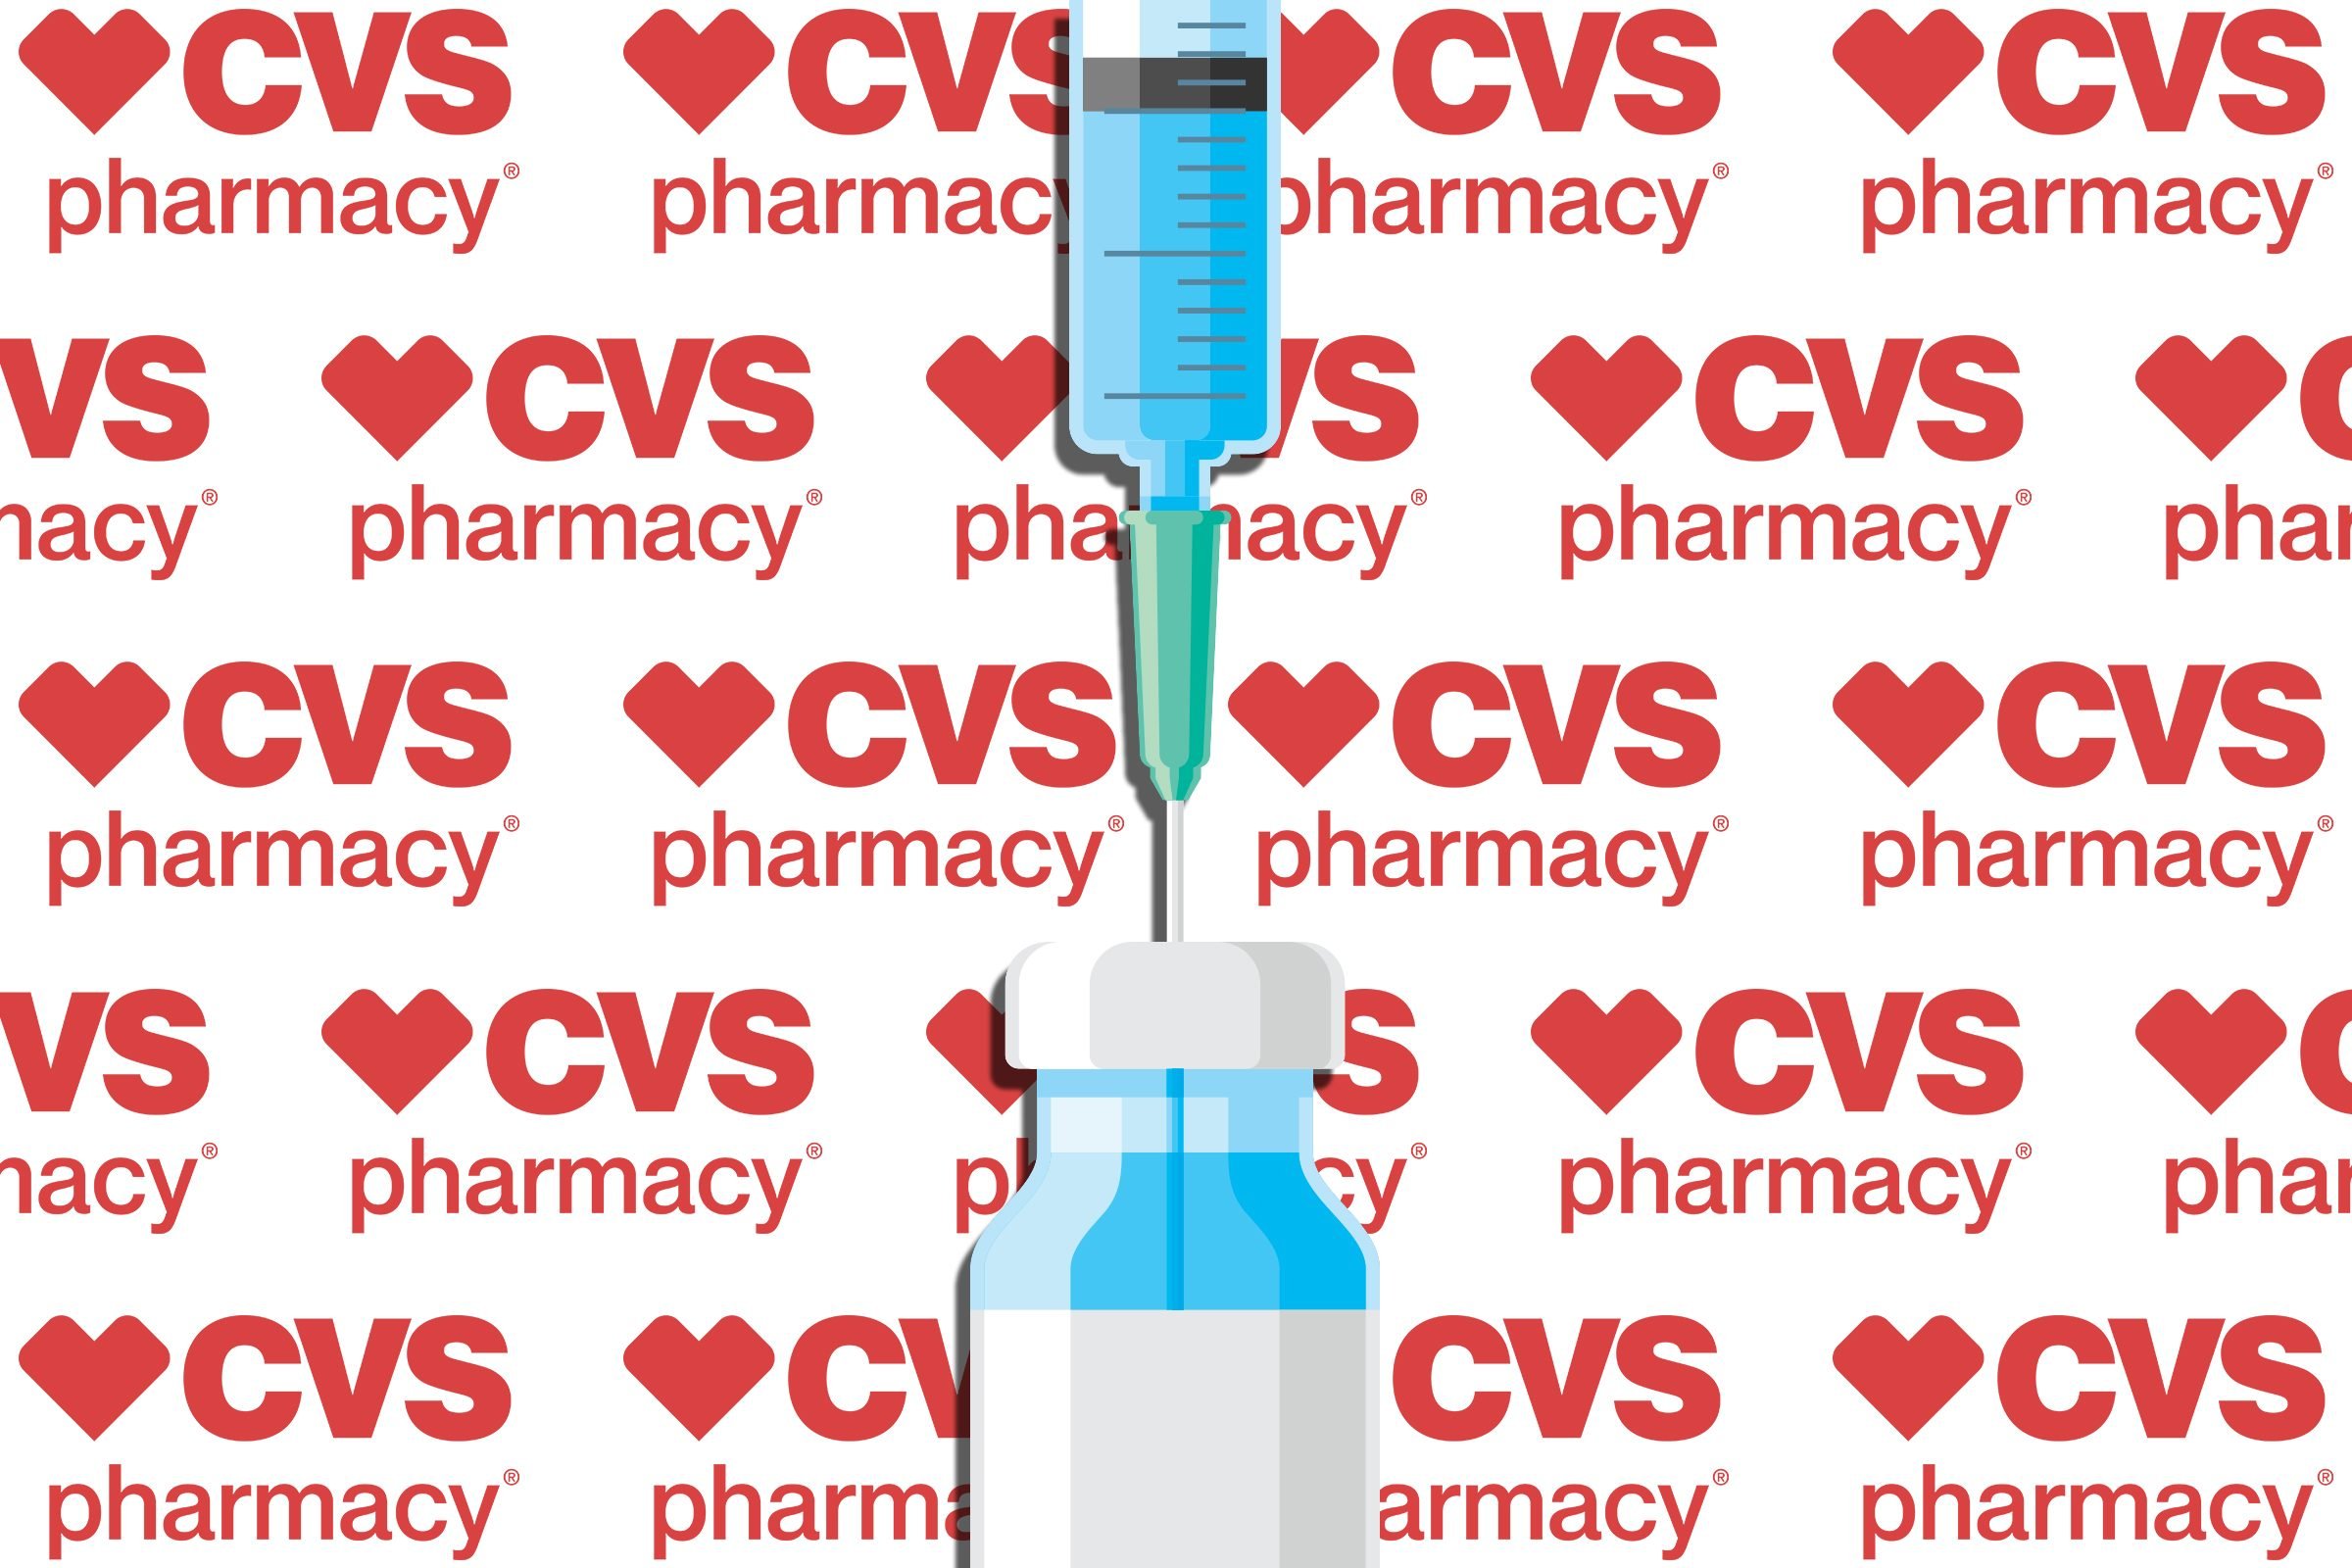 How to Get a Flu Shot at CVS